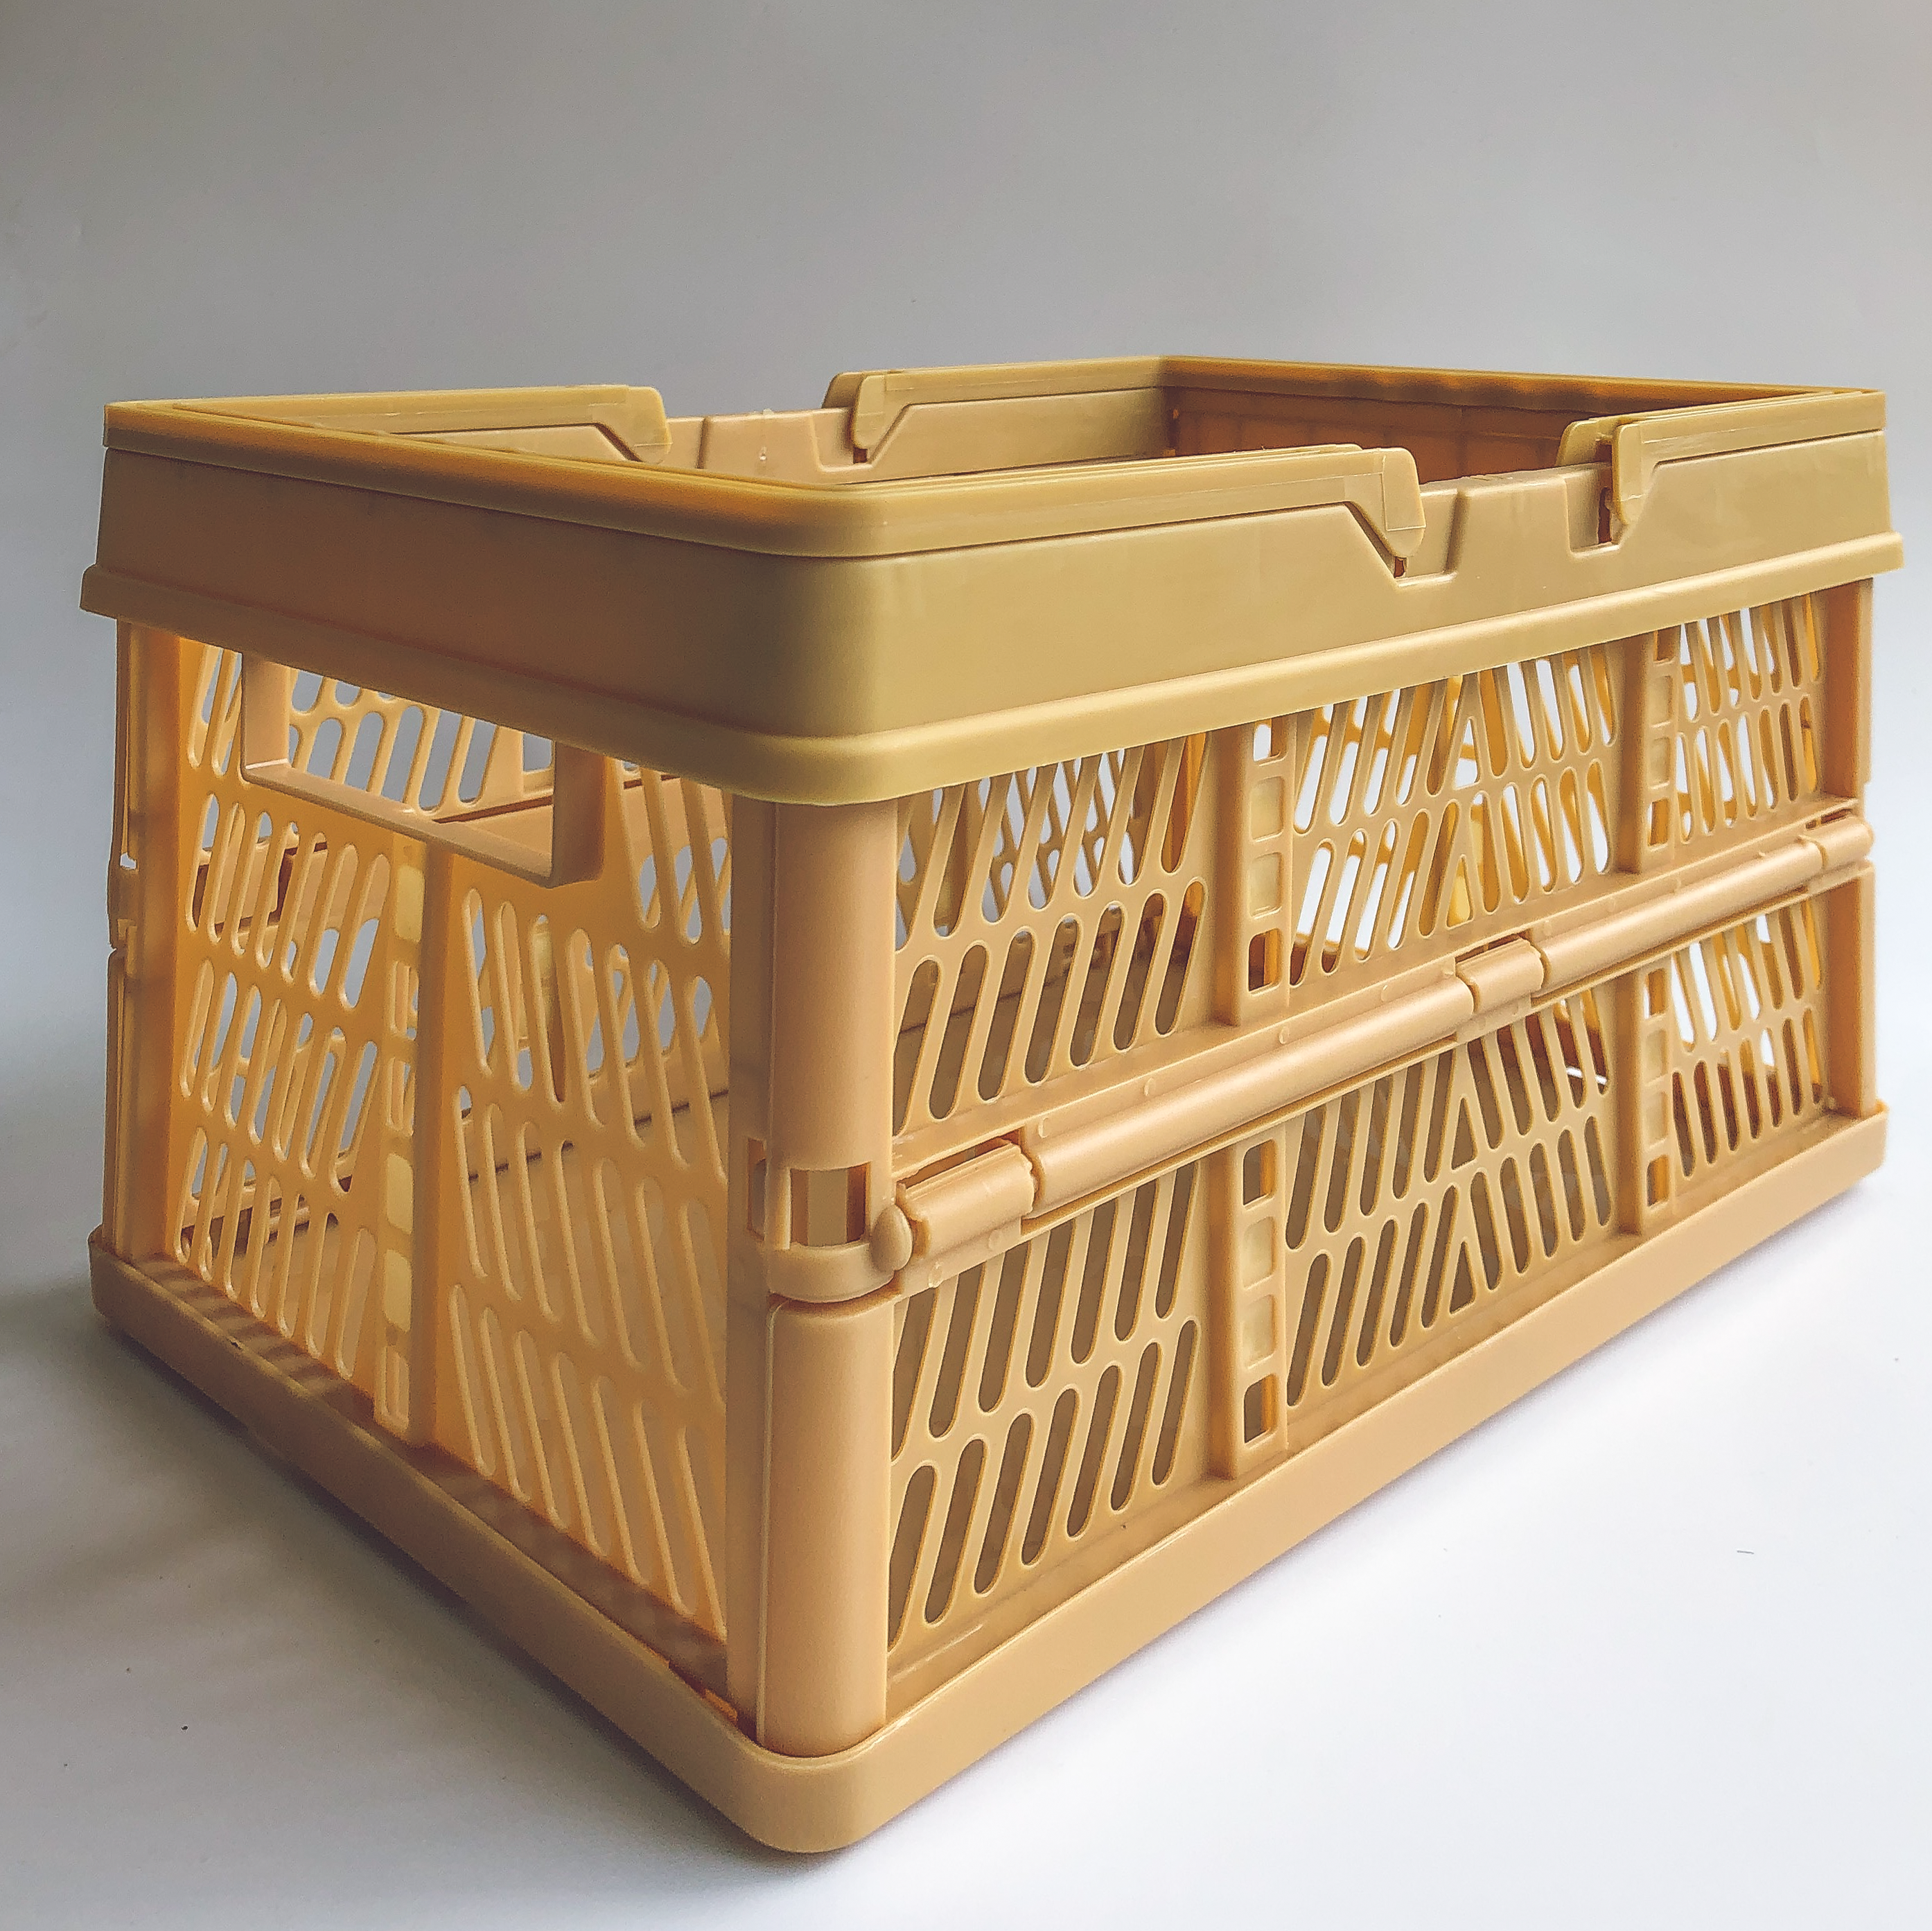 Medium Storage Shopping Basket by PROSE Tabletop